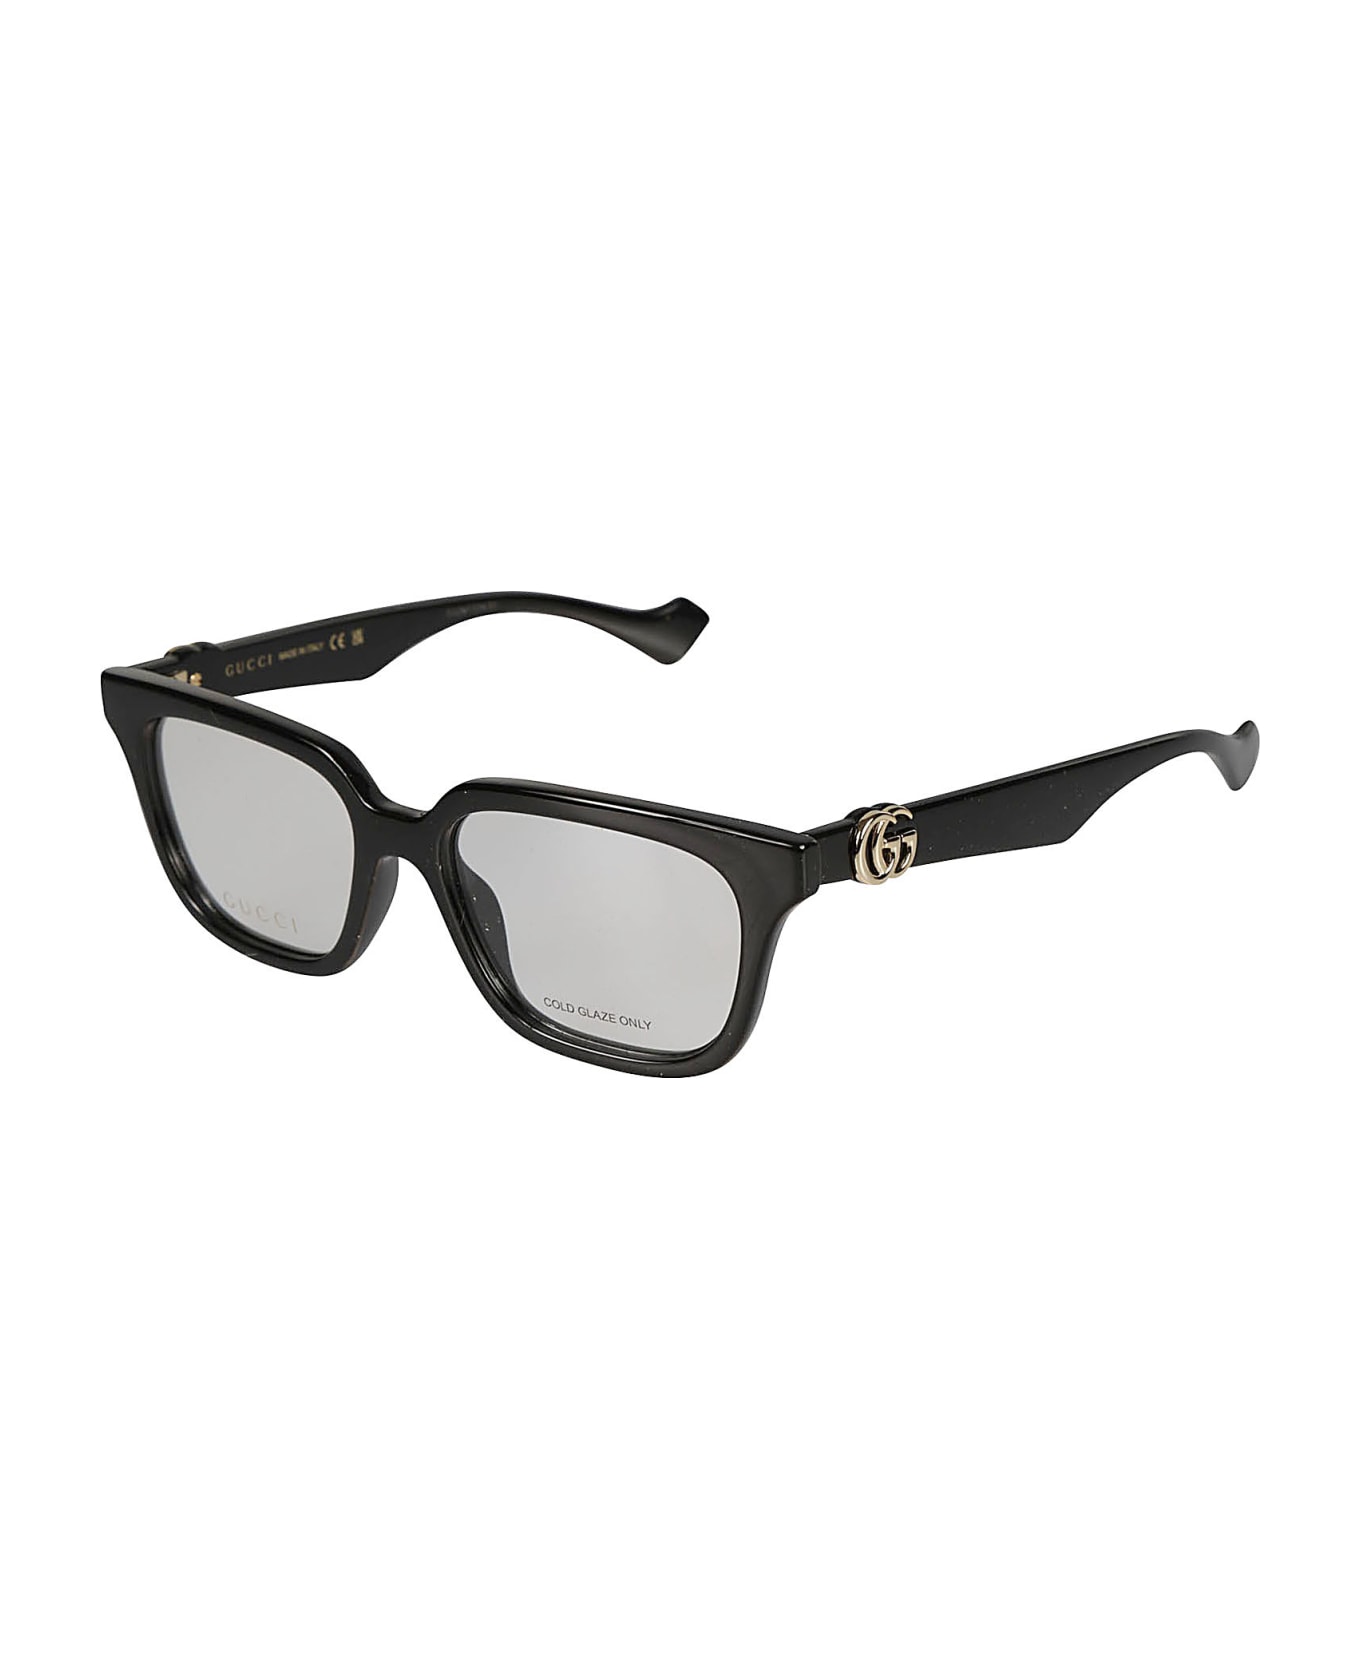 Gucci Eyewear Logo Wayfarer Frame - Black